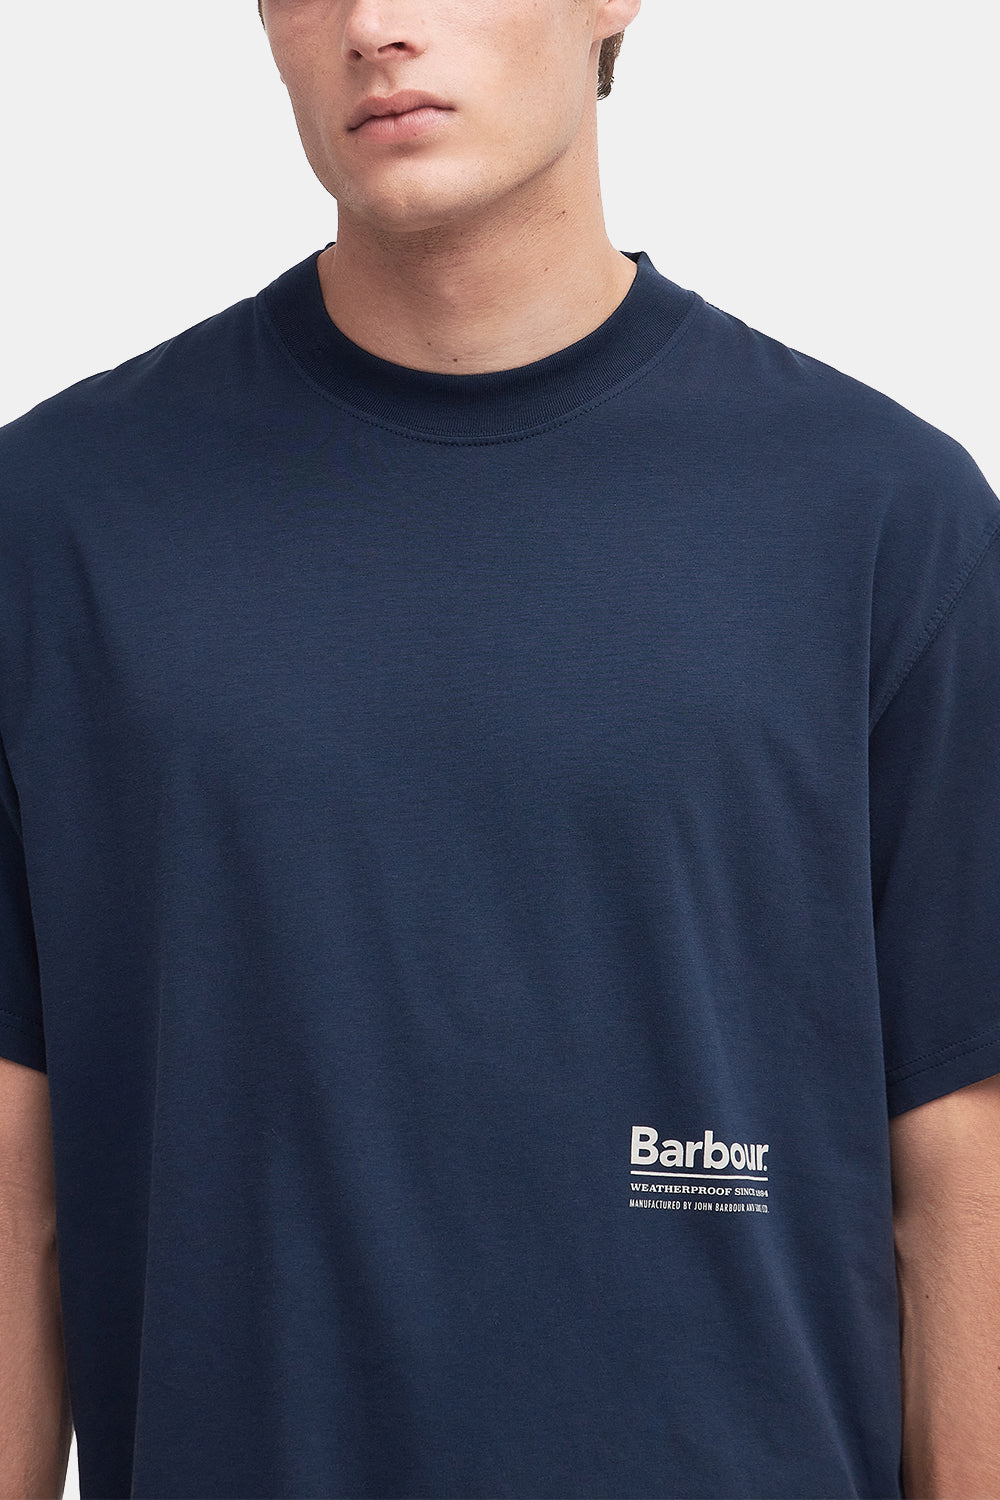 Barbour Portland T-Shirt (Navy)